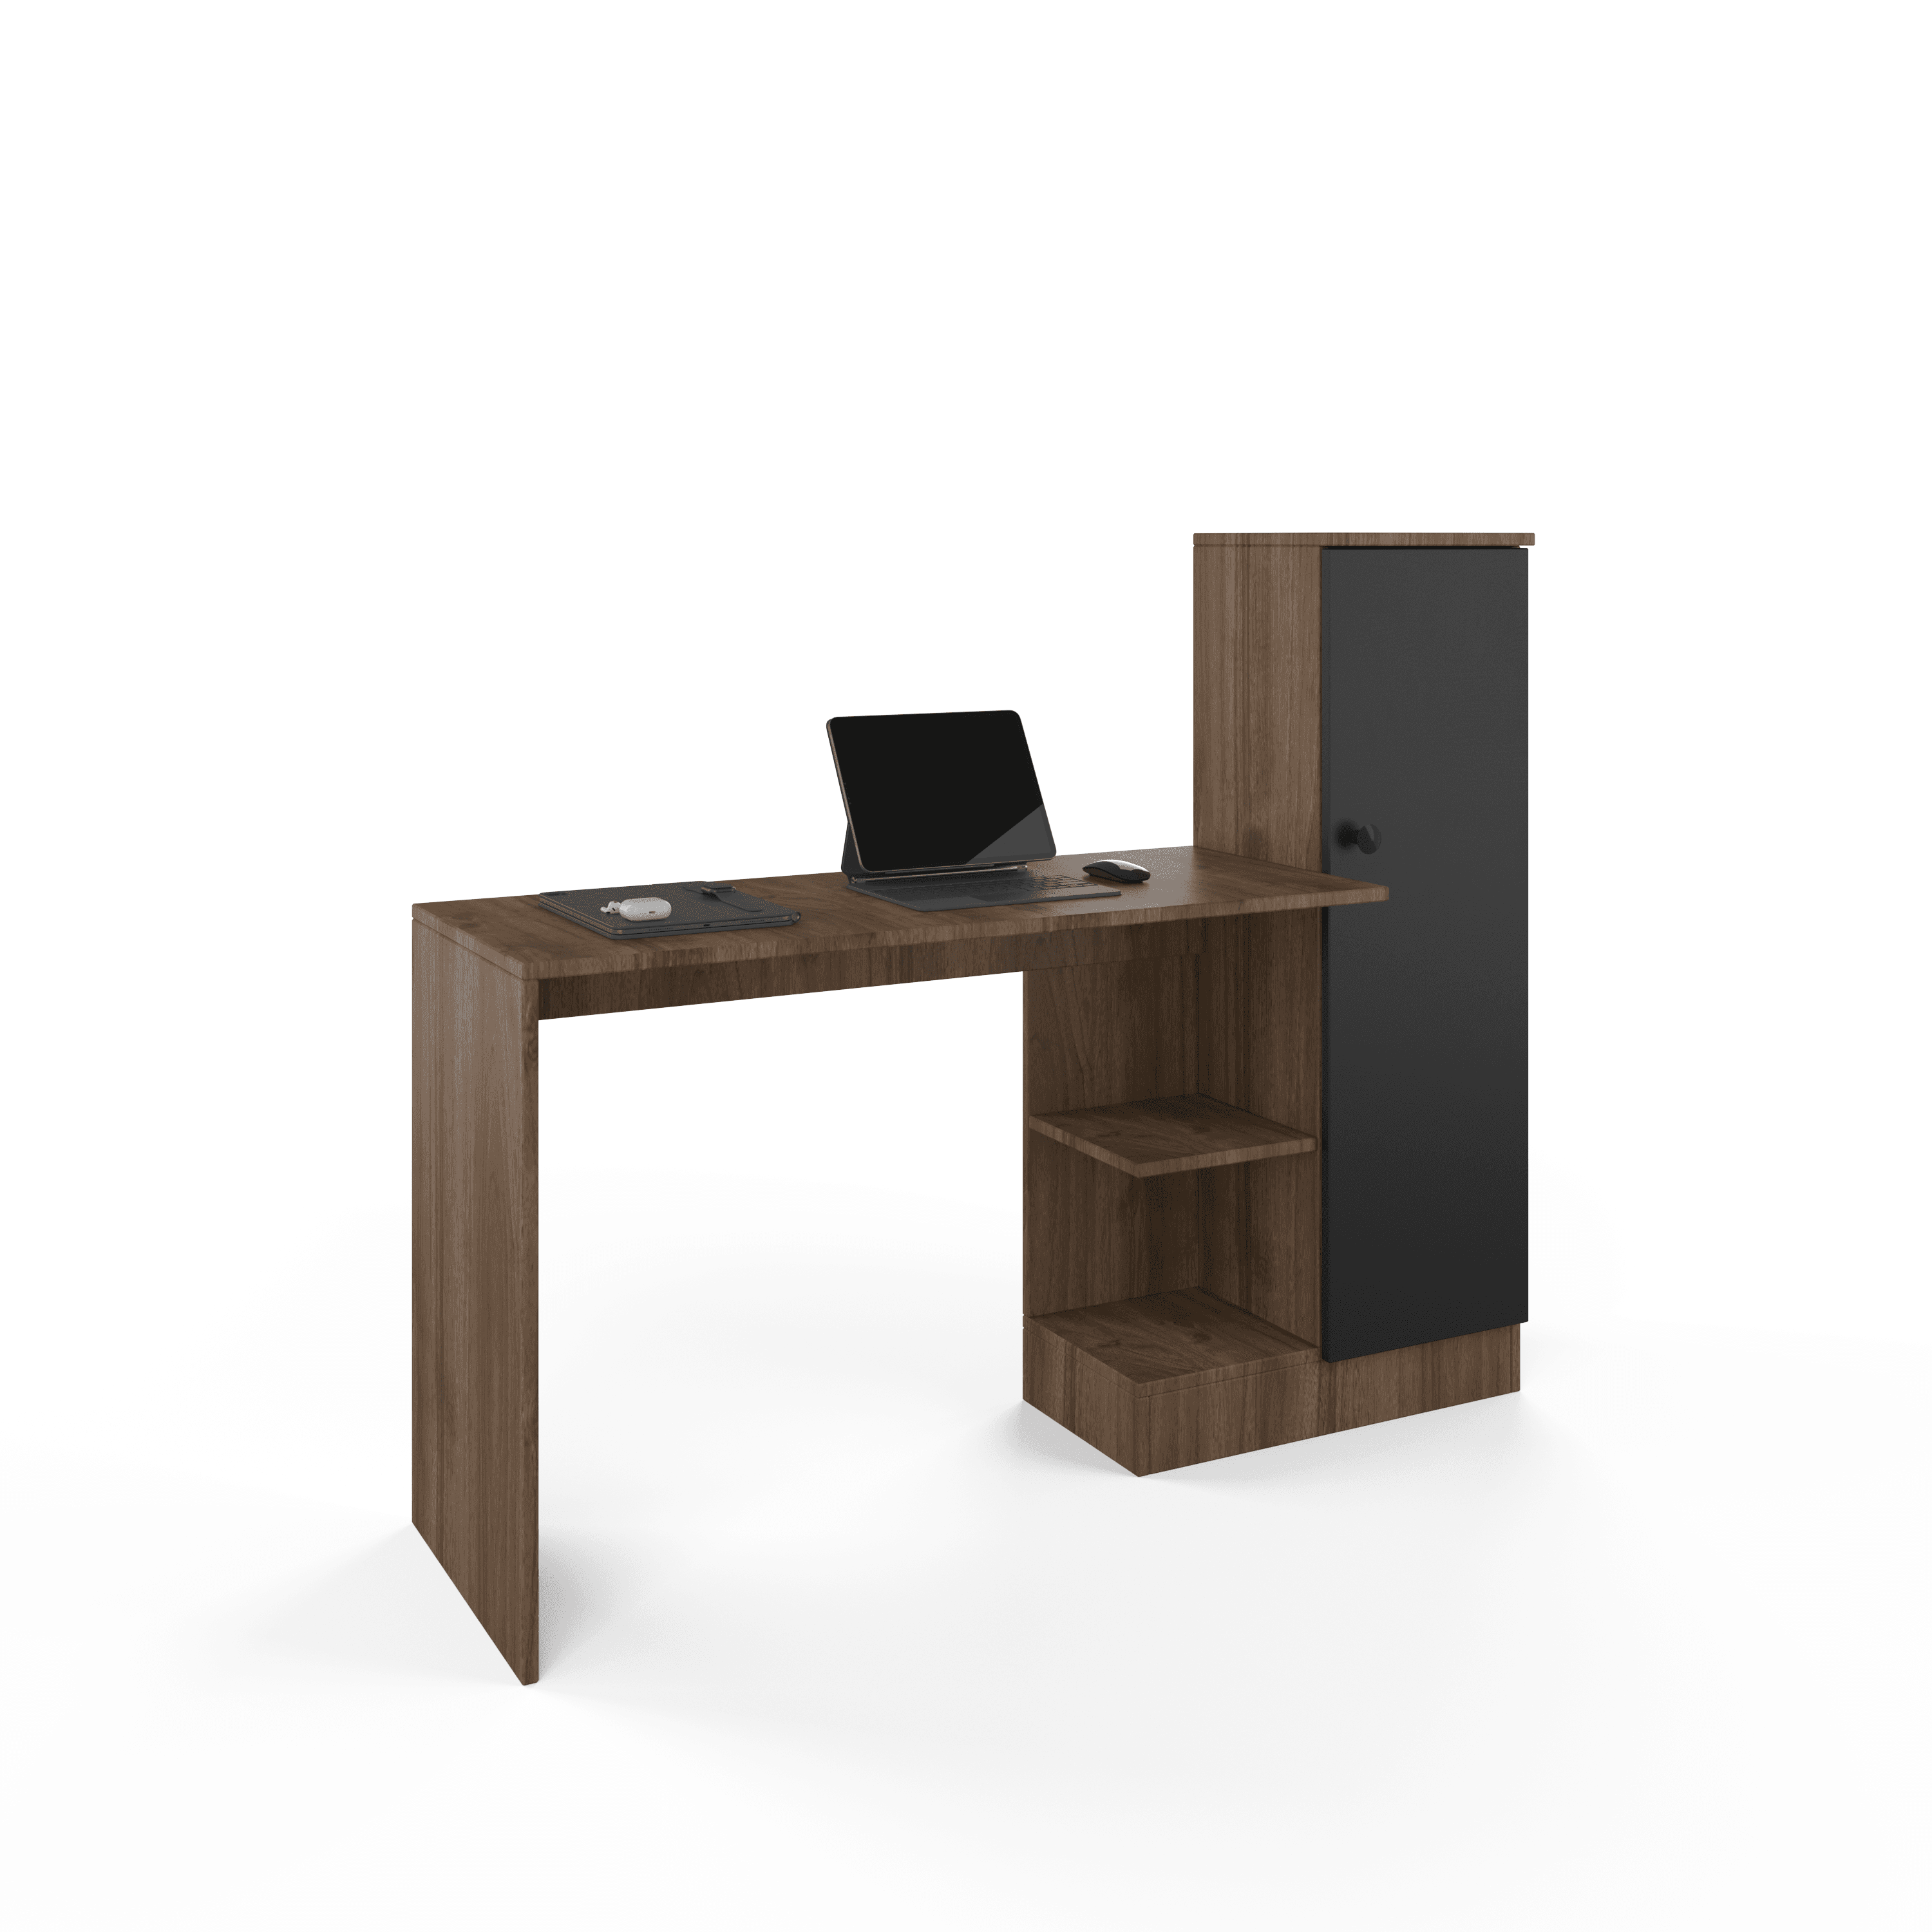 Opus Office Table  - Walnut Color - Black